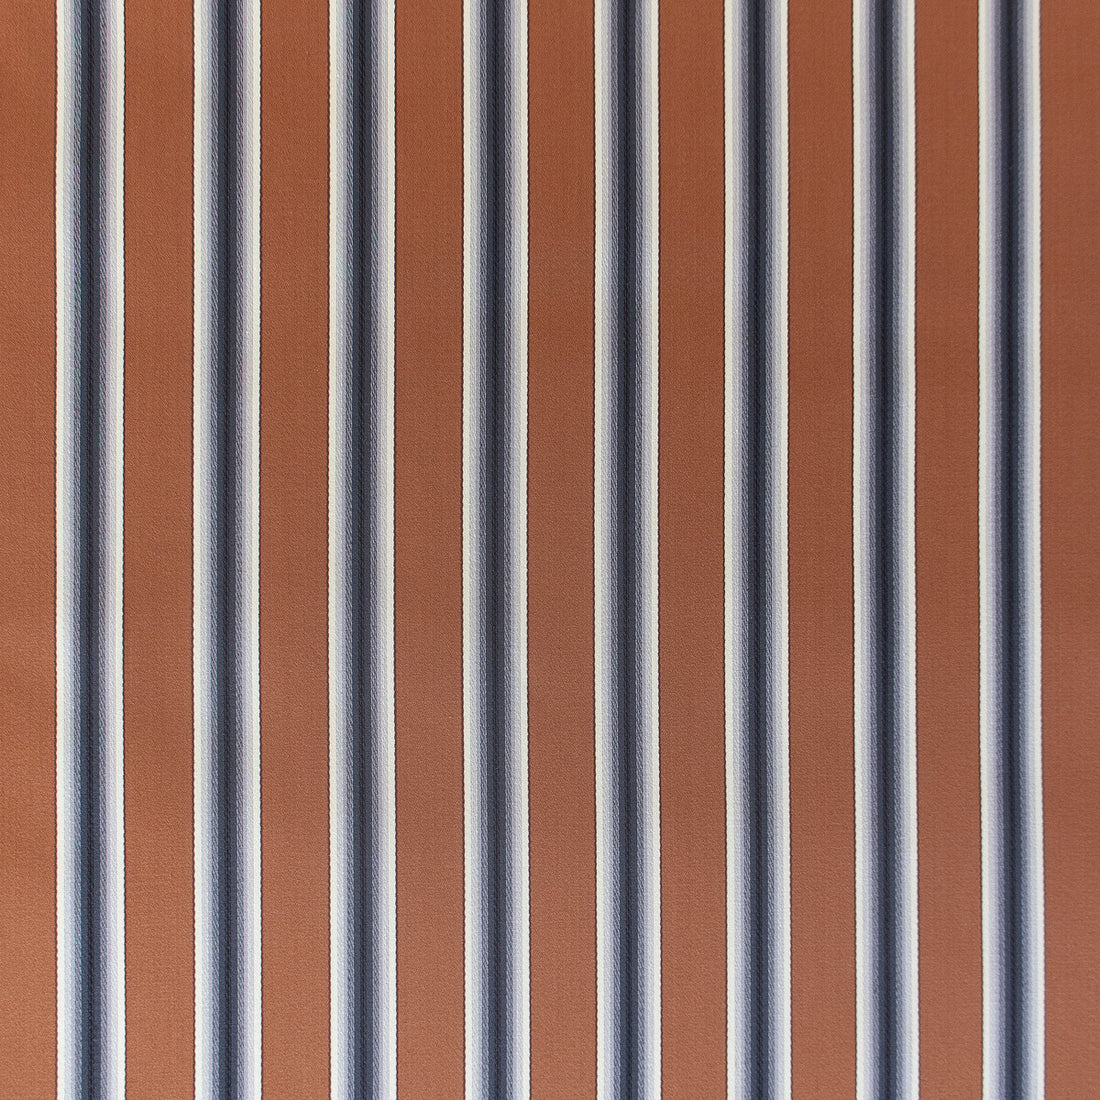 Trastamara fabric in cobre color - pattern LCT1024.002.0 - by Gaston y Daniela in the Lorenzo Castillo V collection